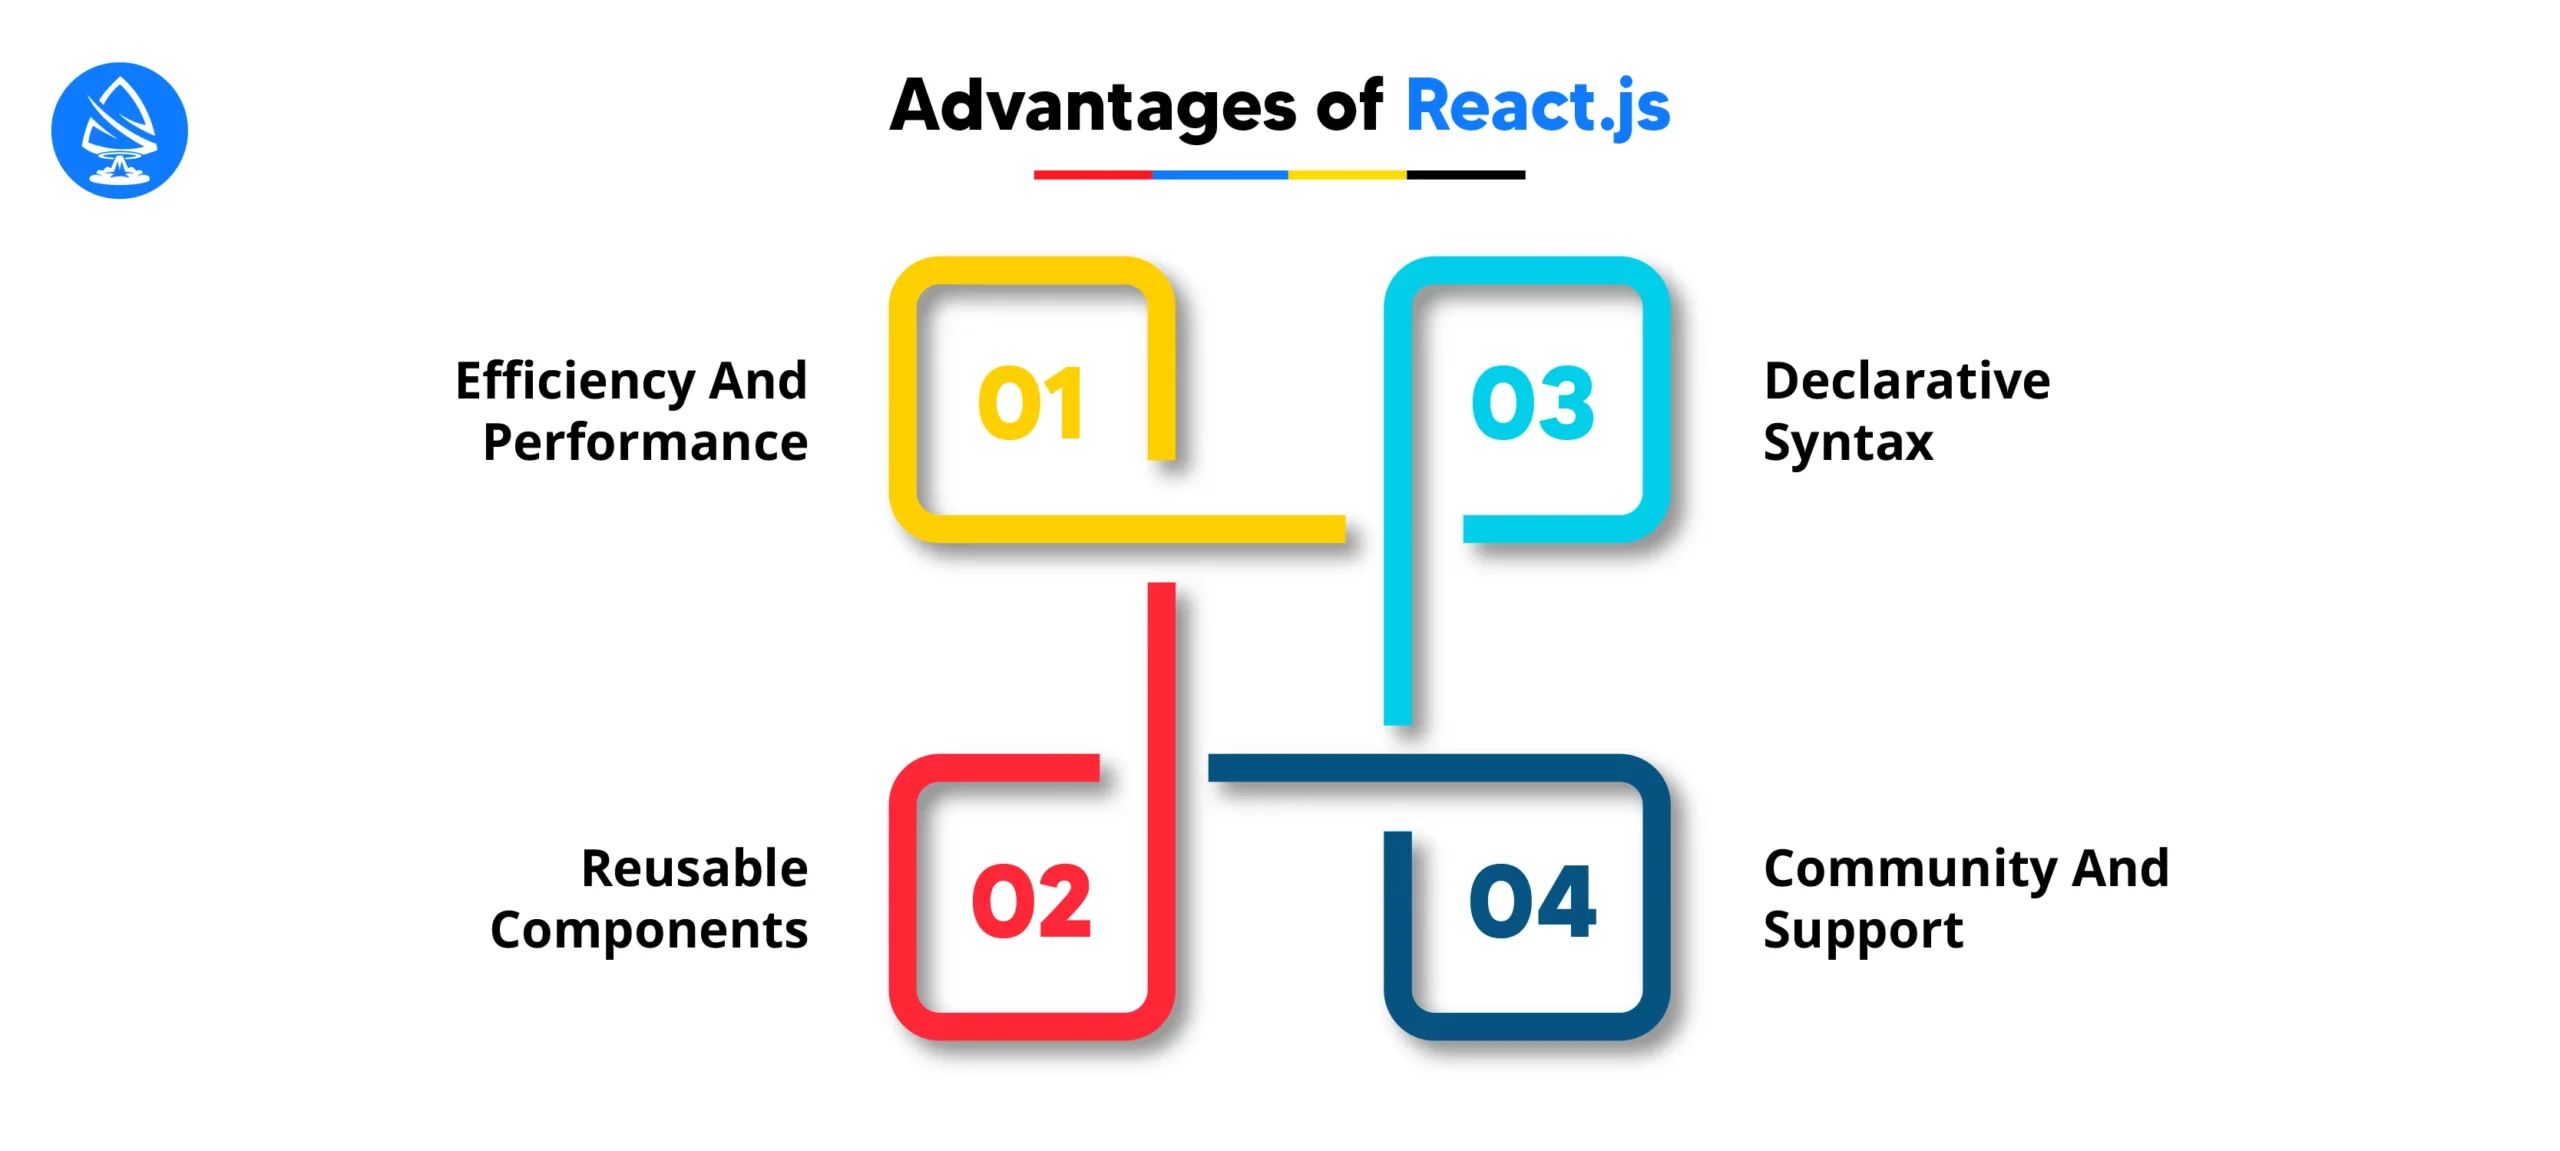 Advantages of React.js